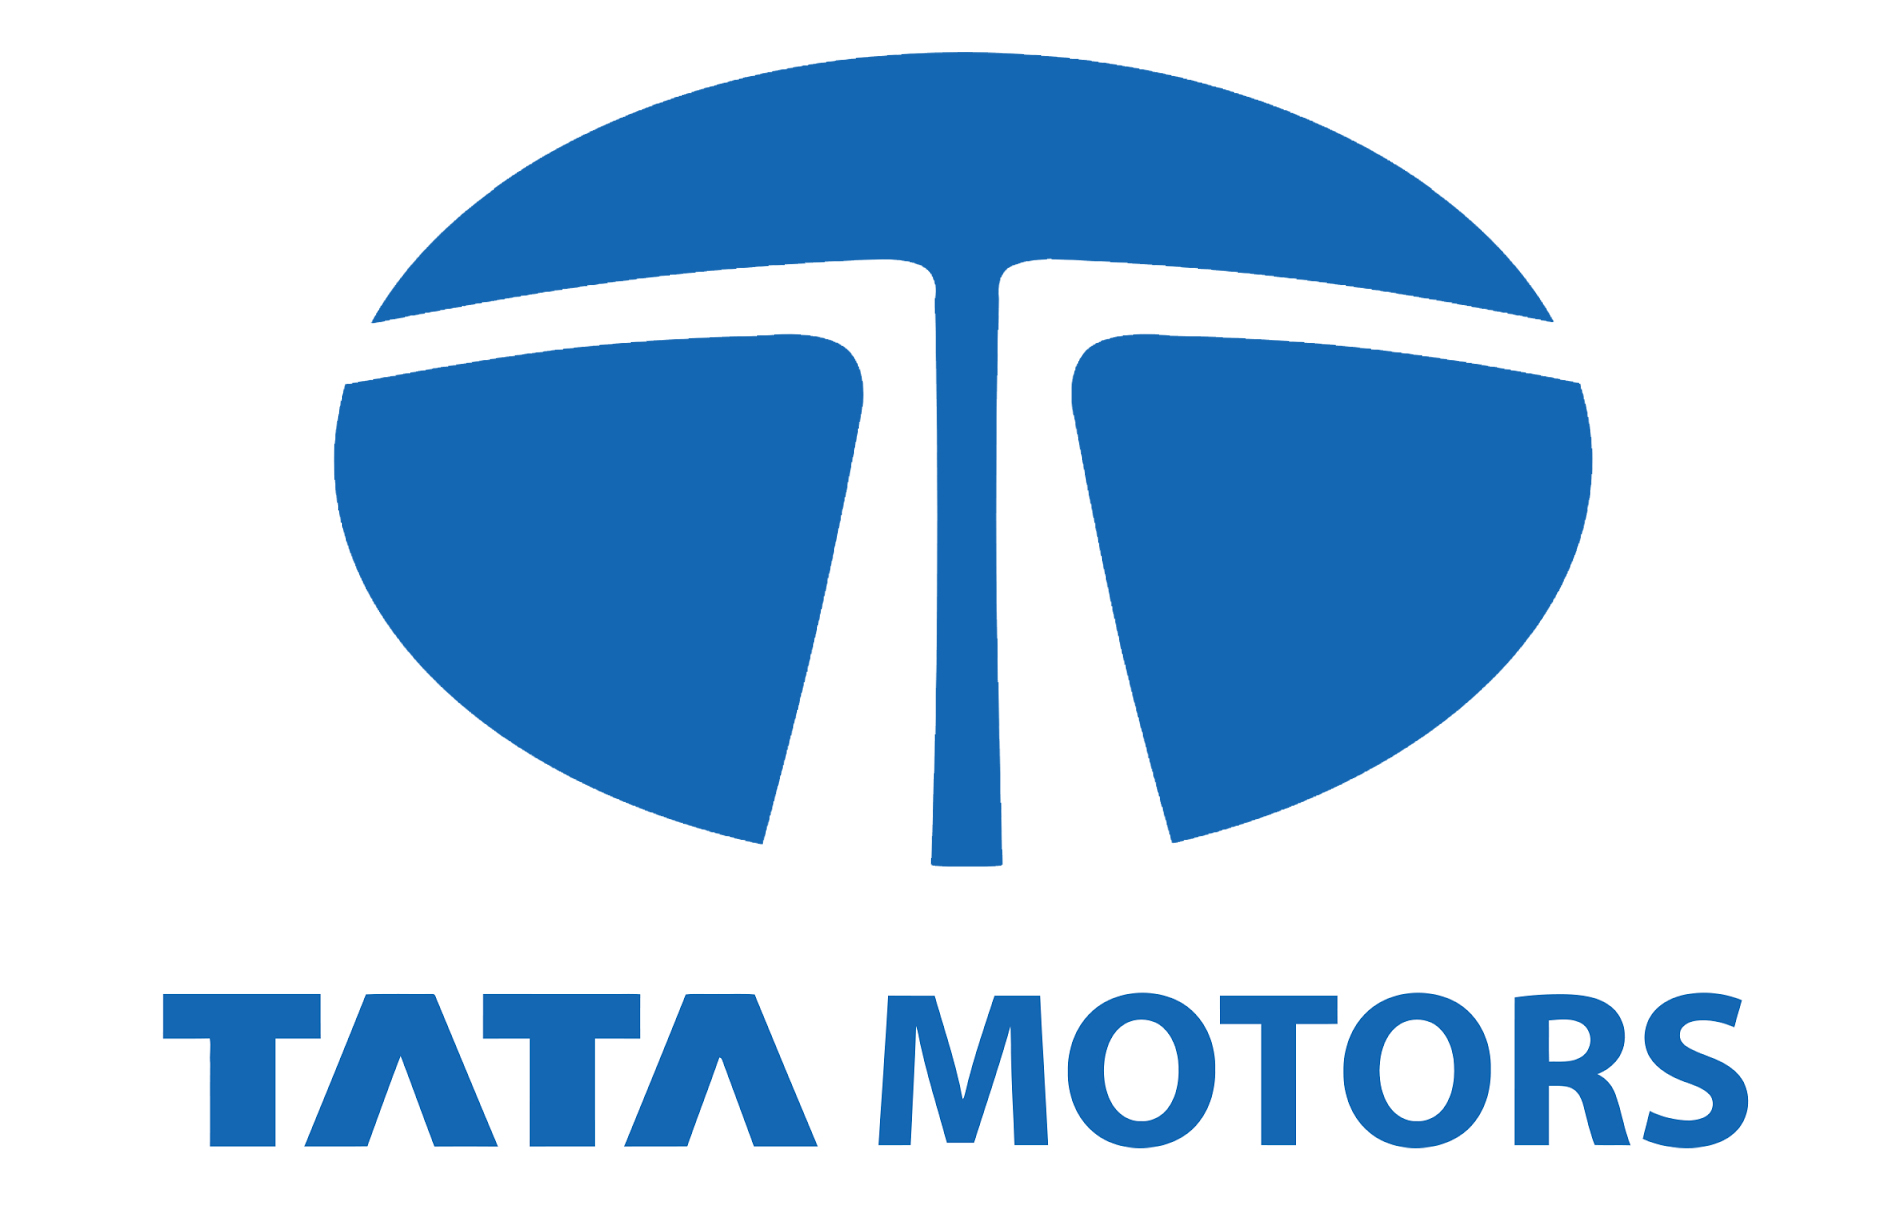 Tata Motors Cars Showroom - Progressive Cars|Show Room|Automotive